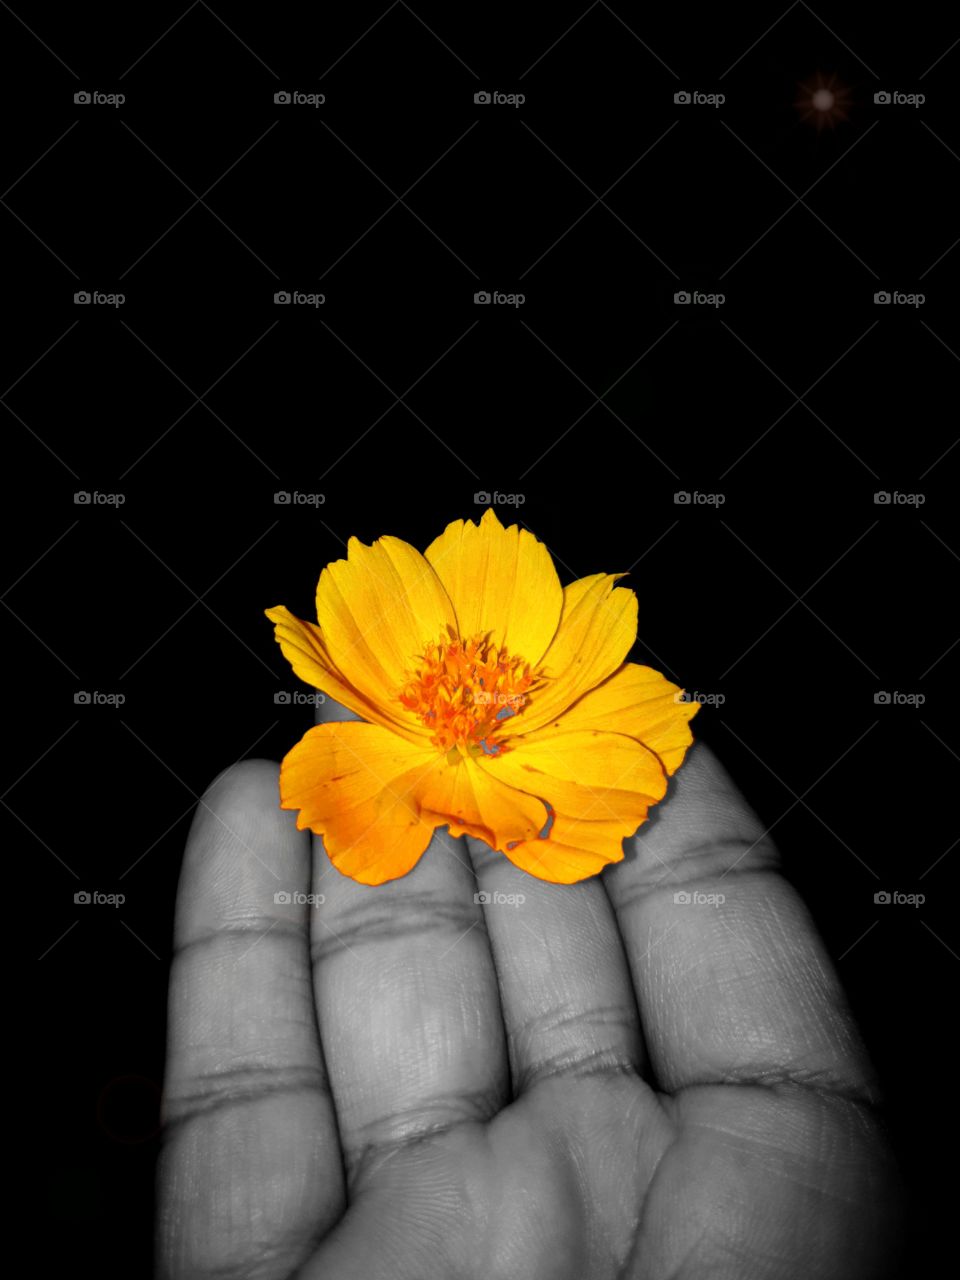 In the hands of marigolds